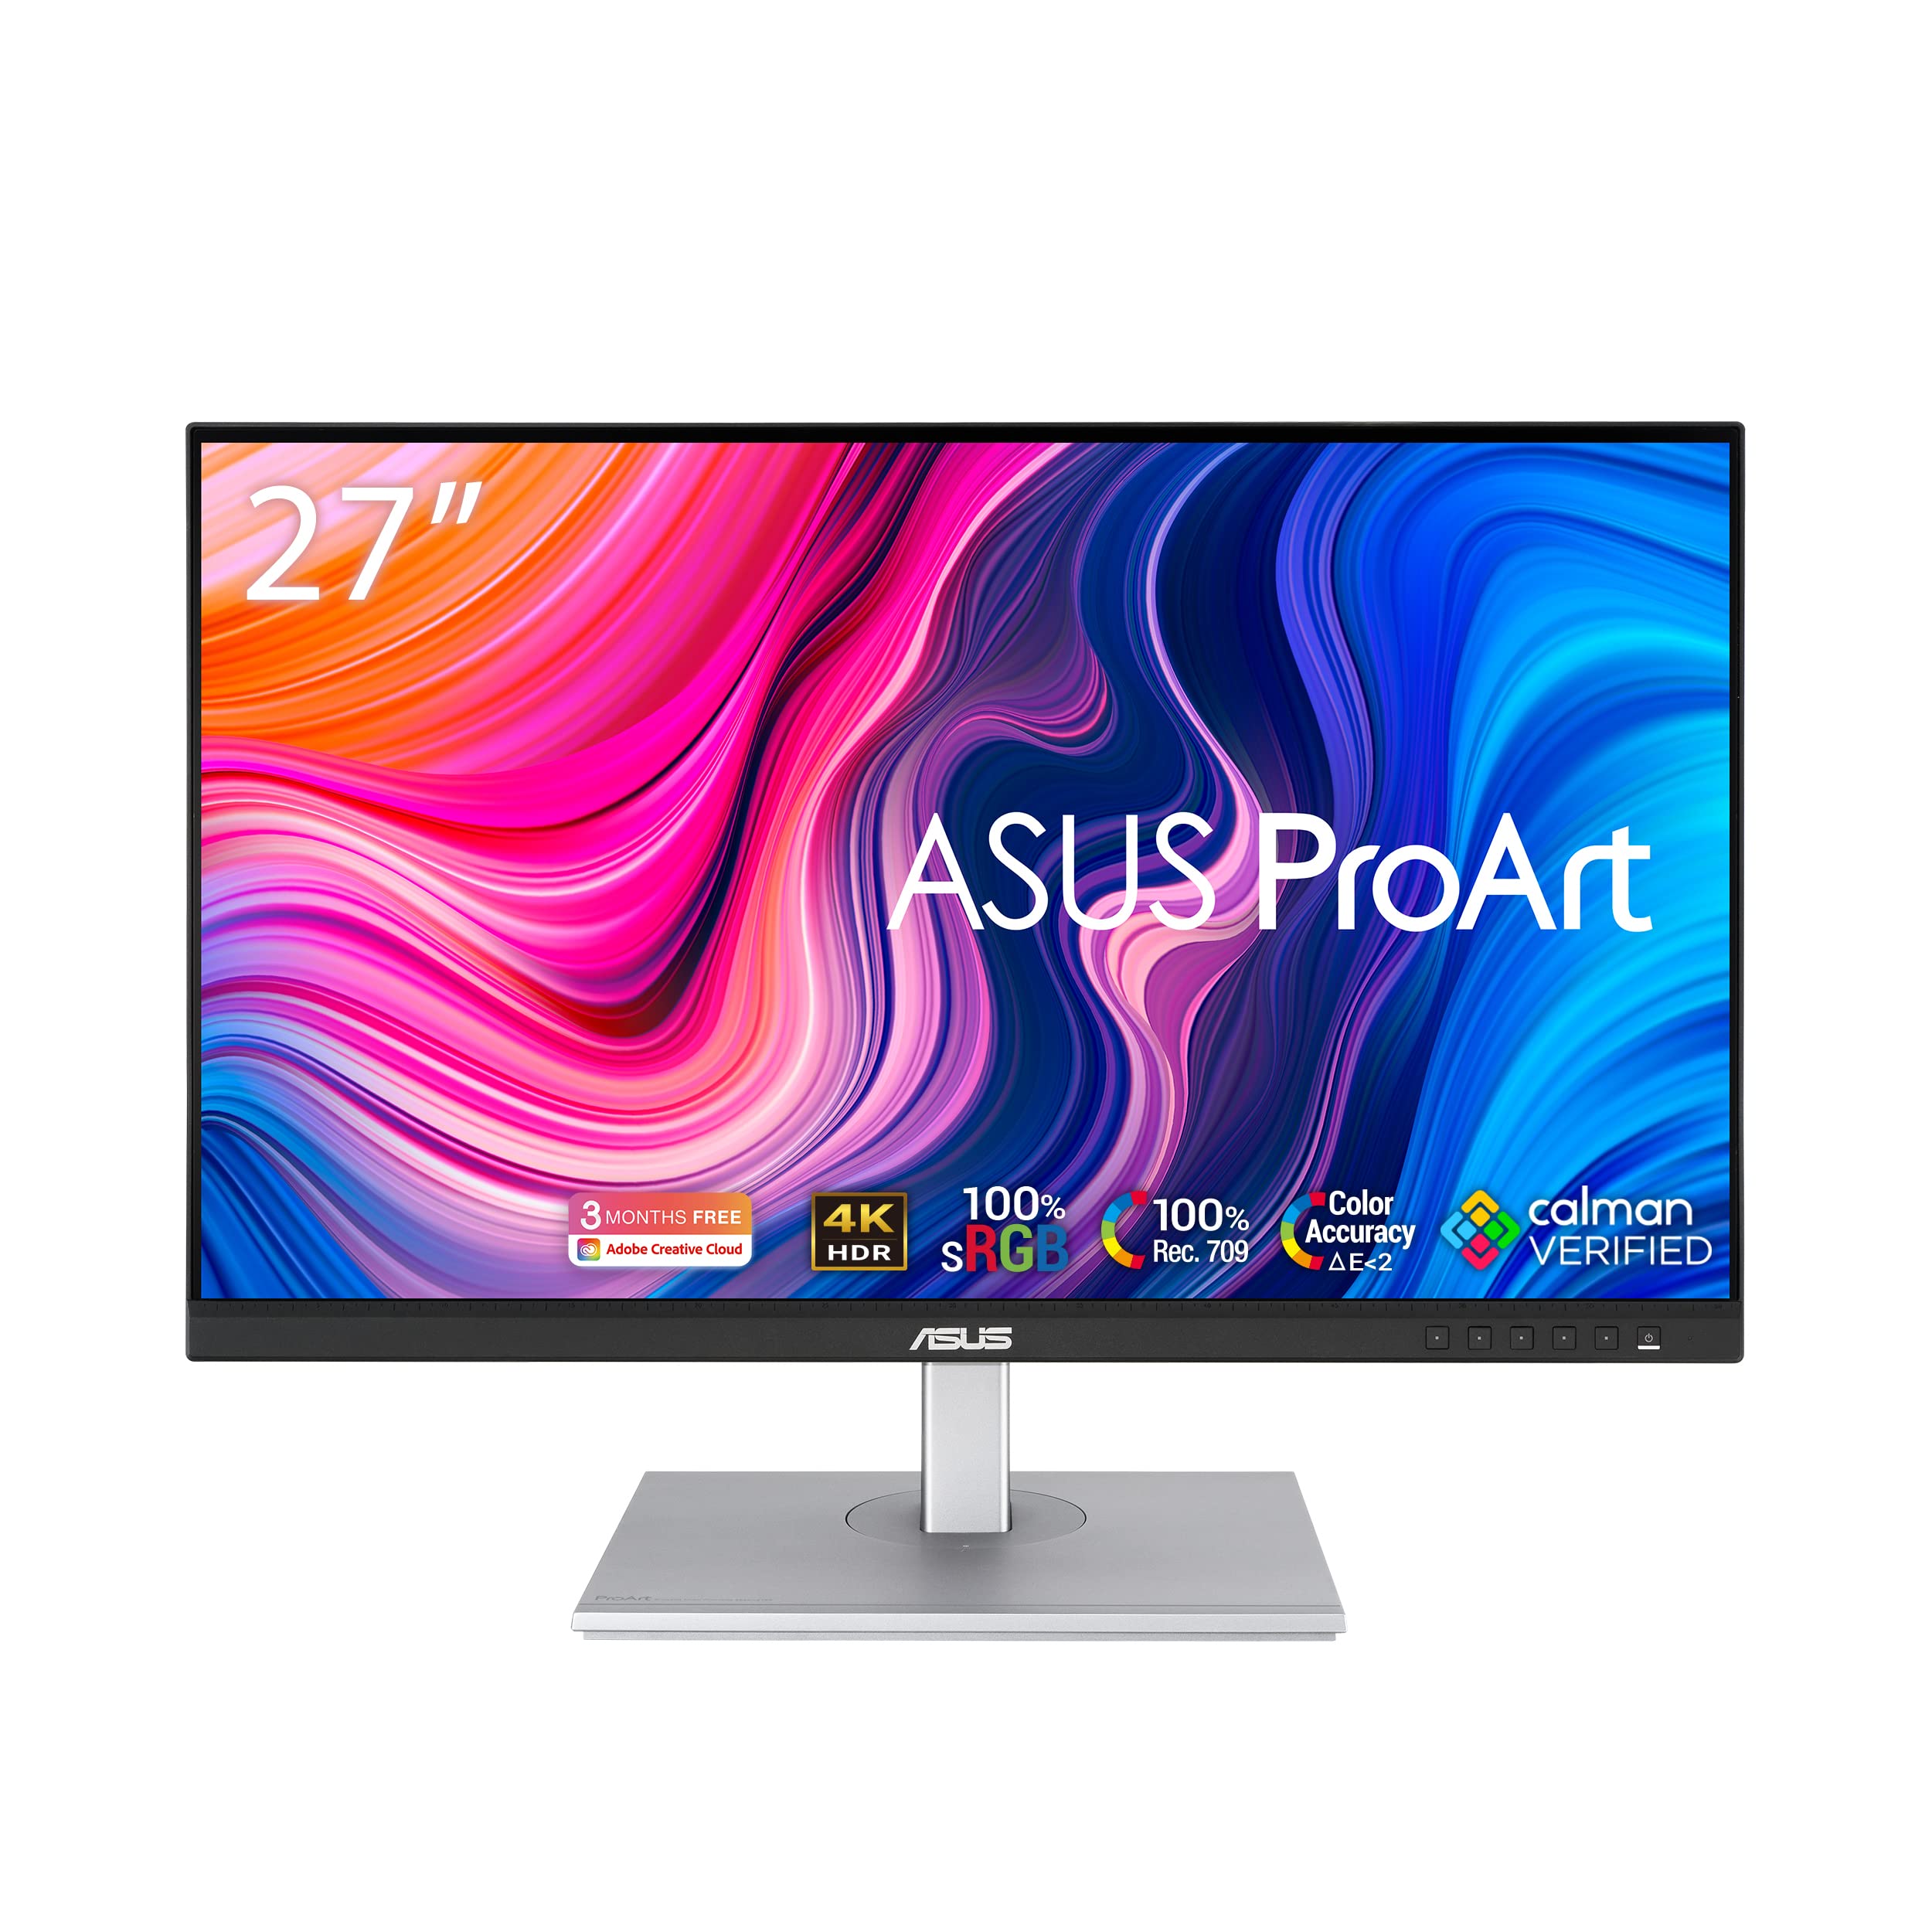 Asus ProArt Display PA279CV 27” 4K HDR UHD (3840 x 2160) Monitor, IPS, 100% sRGB/Rec. 709, ΔE < 2, USB-C DisplayPort HDMI USB hub, Calman Verified